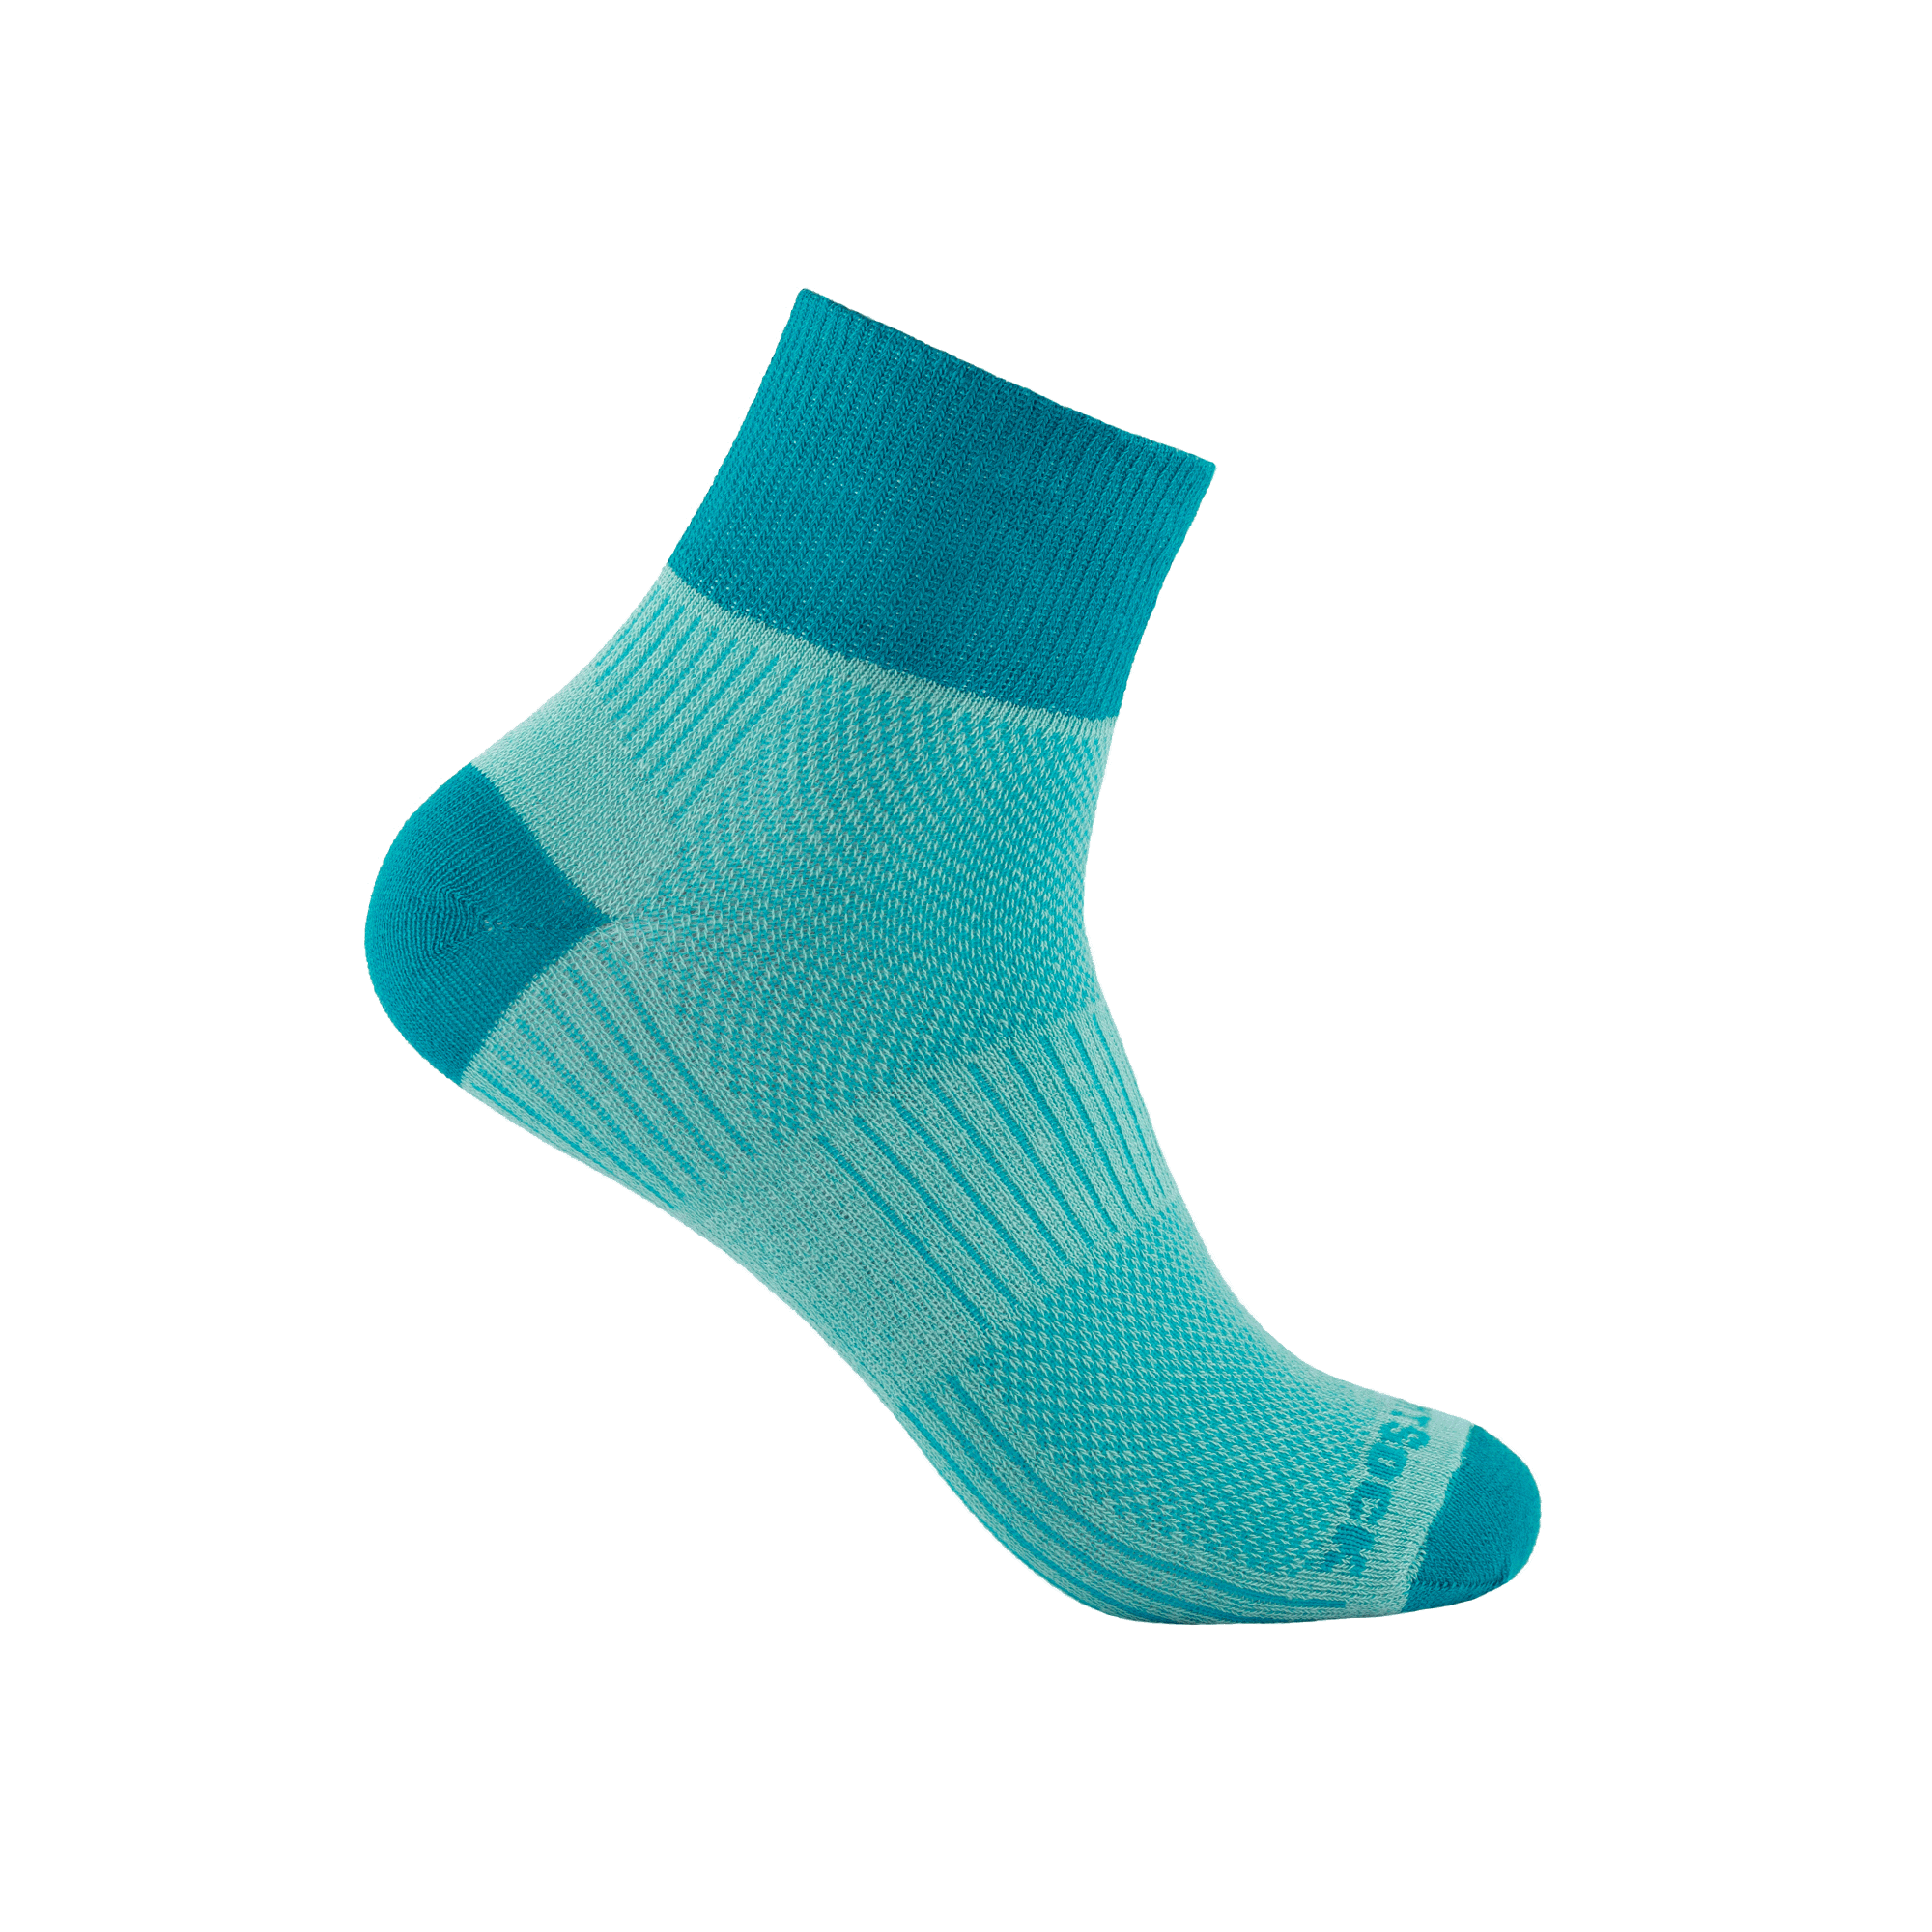 #farbe_seamist-turquoise | WRIGHTSOCK doppellagige Anti-Blasen-Socken - COOLMESH II Quarter - seamist-turquoise